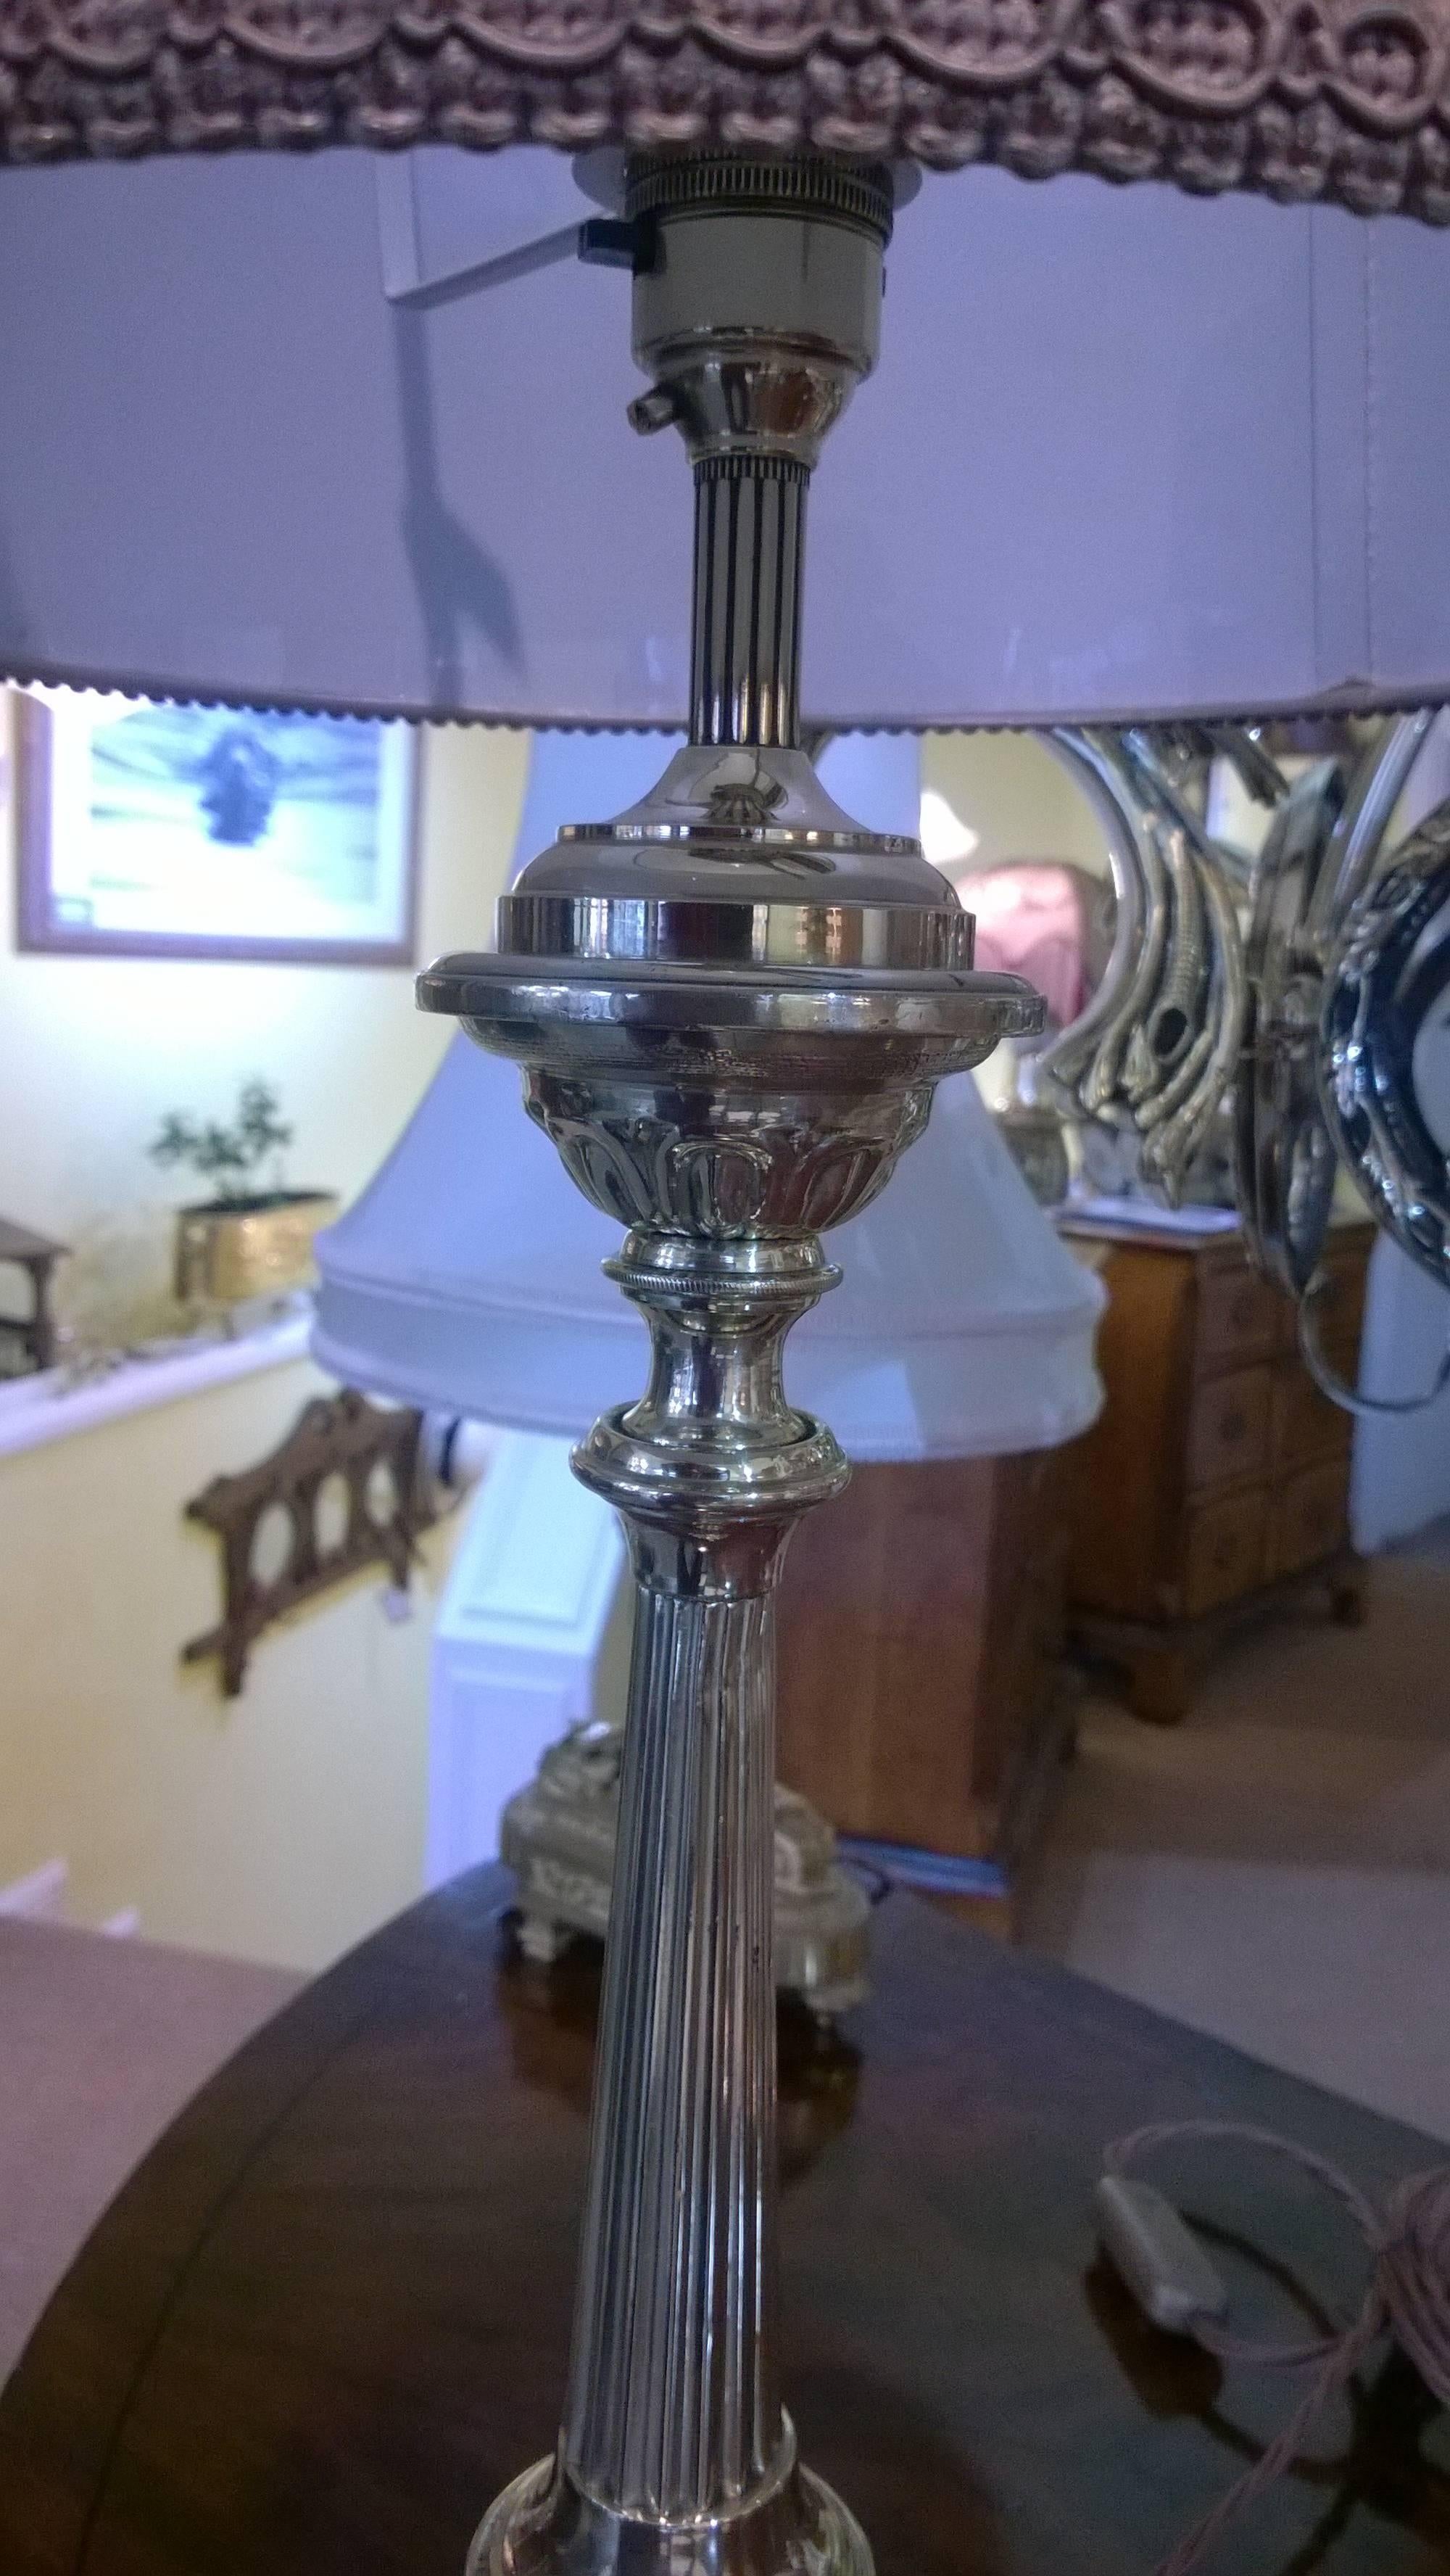 Mid-20th Century Brass Table Lamp